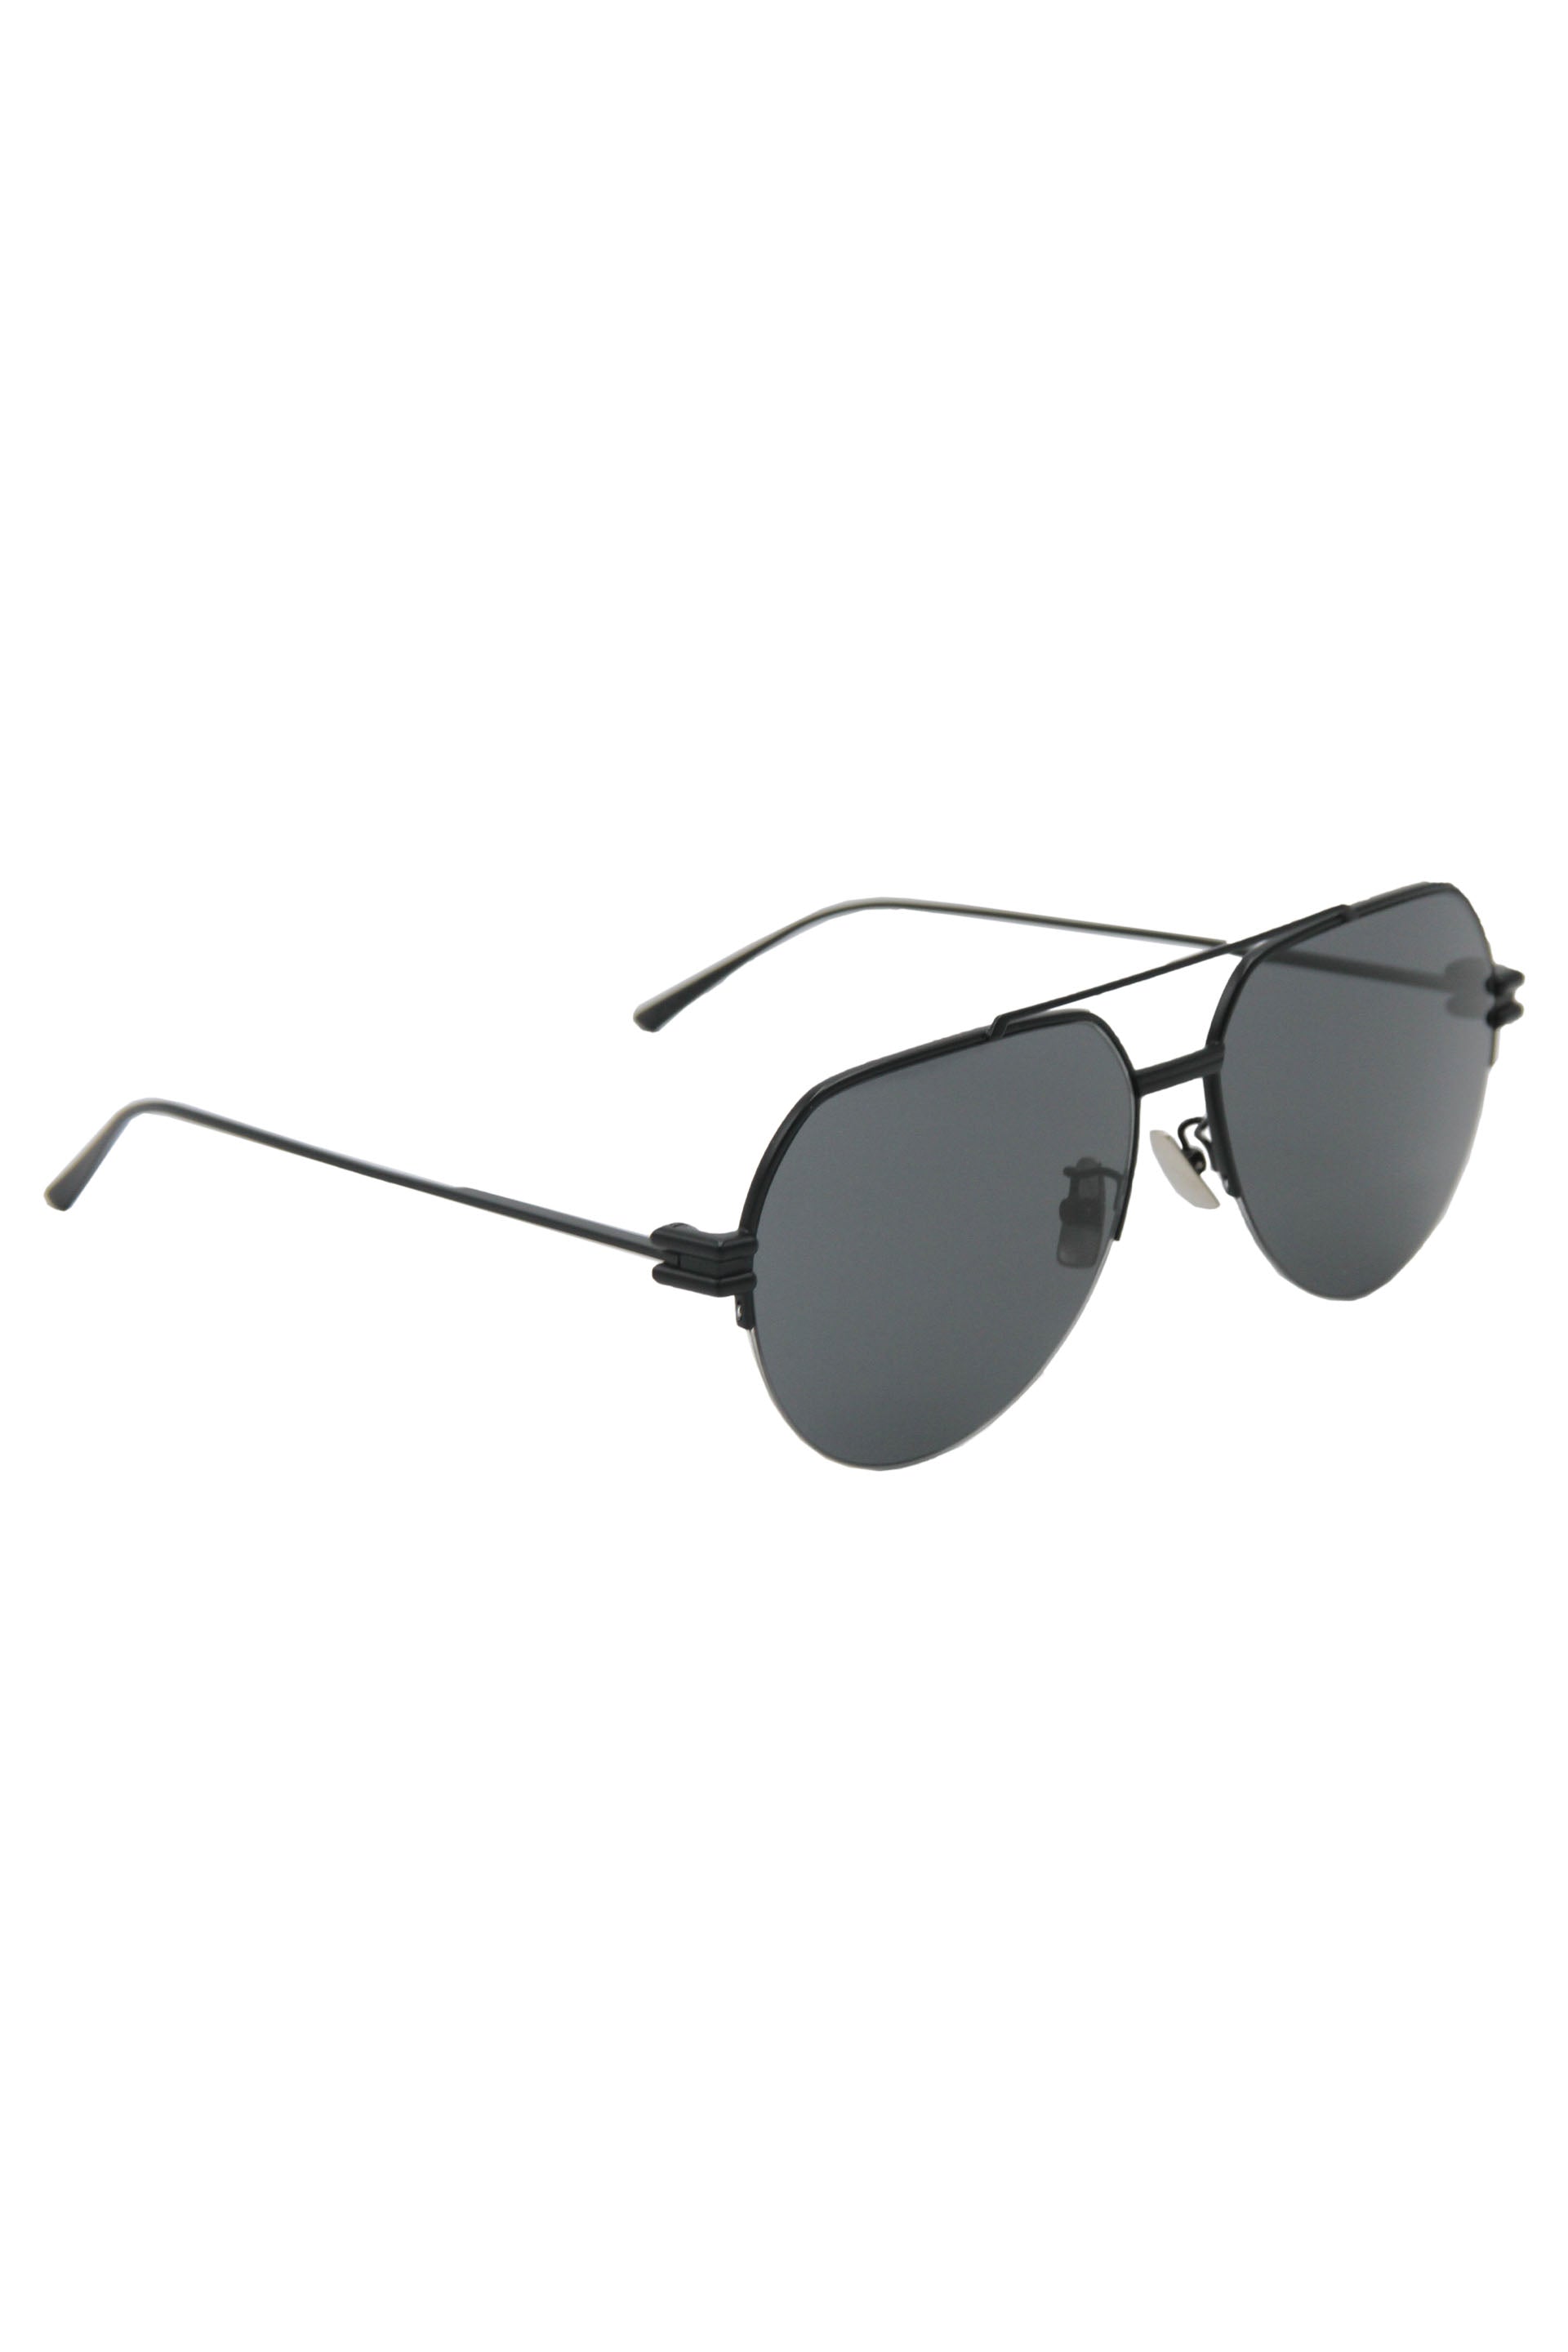 Pilot sunglasses-Bottega Veneta-OUTLET-SALE-TU-ARCHIVIST